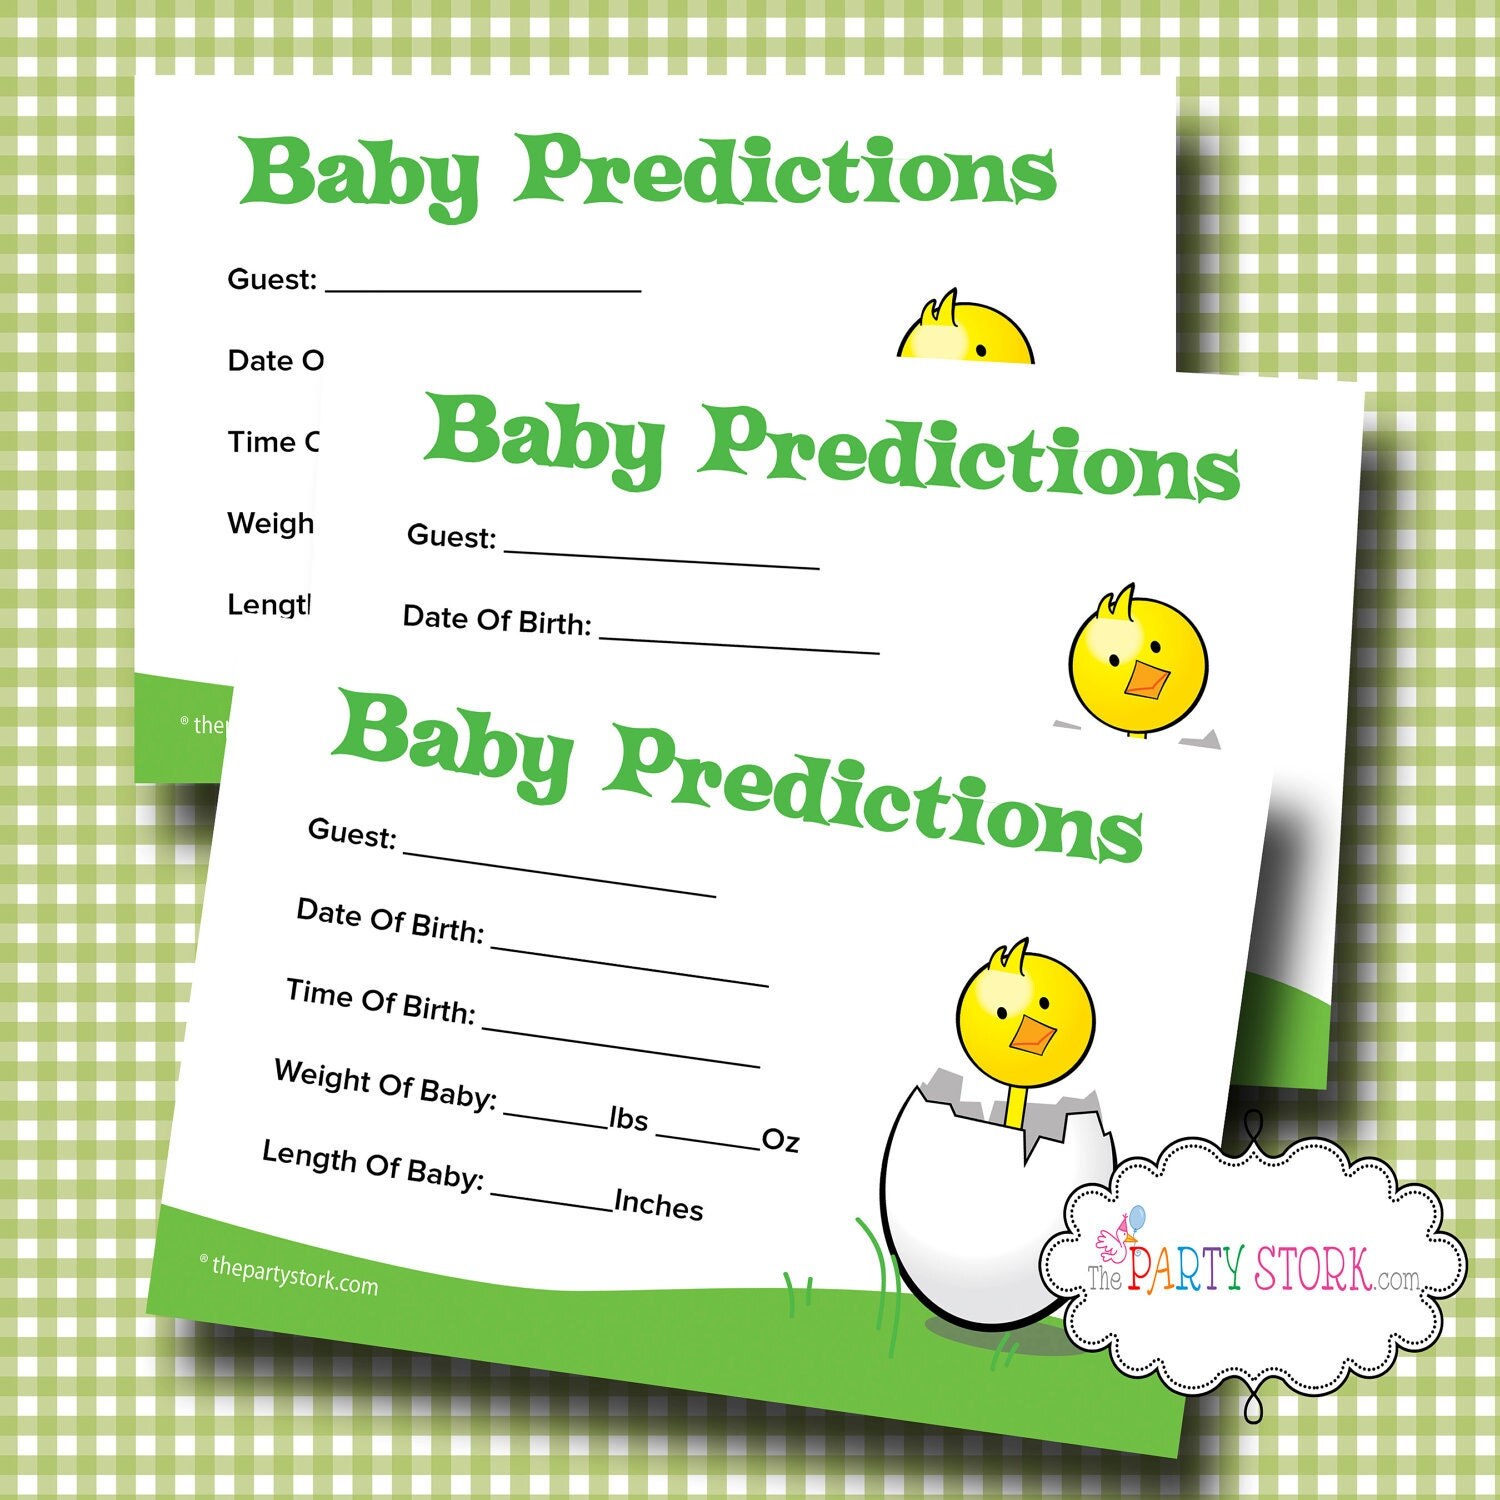 baby-predictions-card-printable-digital-download-instant-download